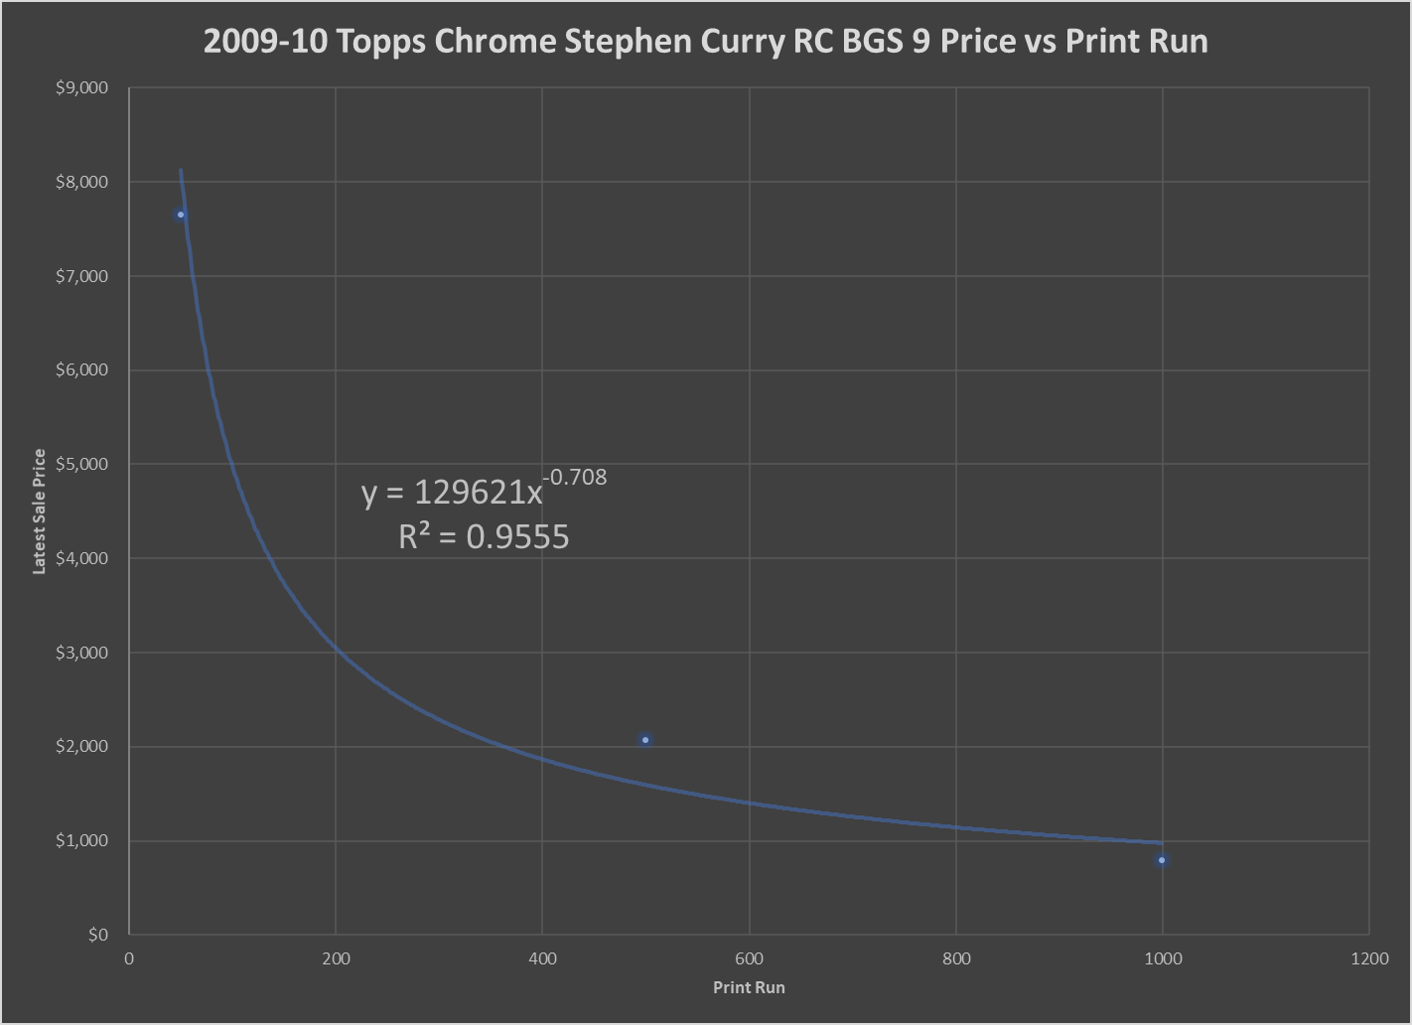 2009-10 Topps Chrome Stephen Curry RC Price vs Print Run